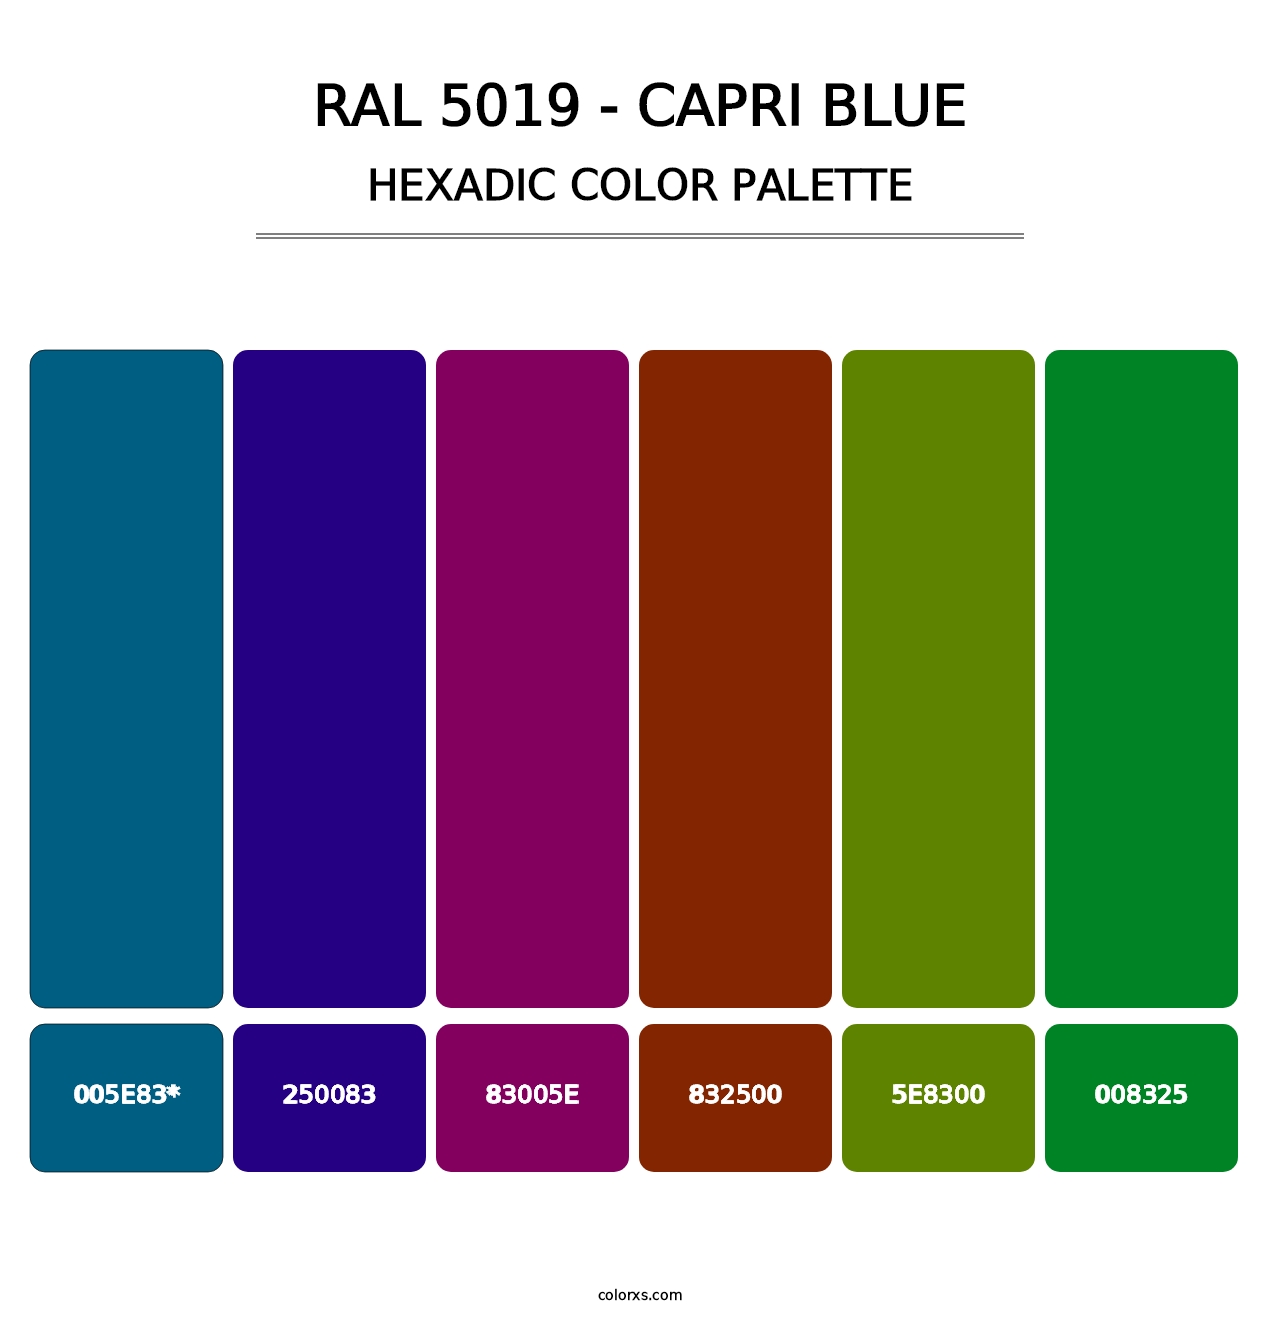 RAL 5019 - Capri Blue - Hexadic Color Palette